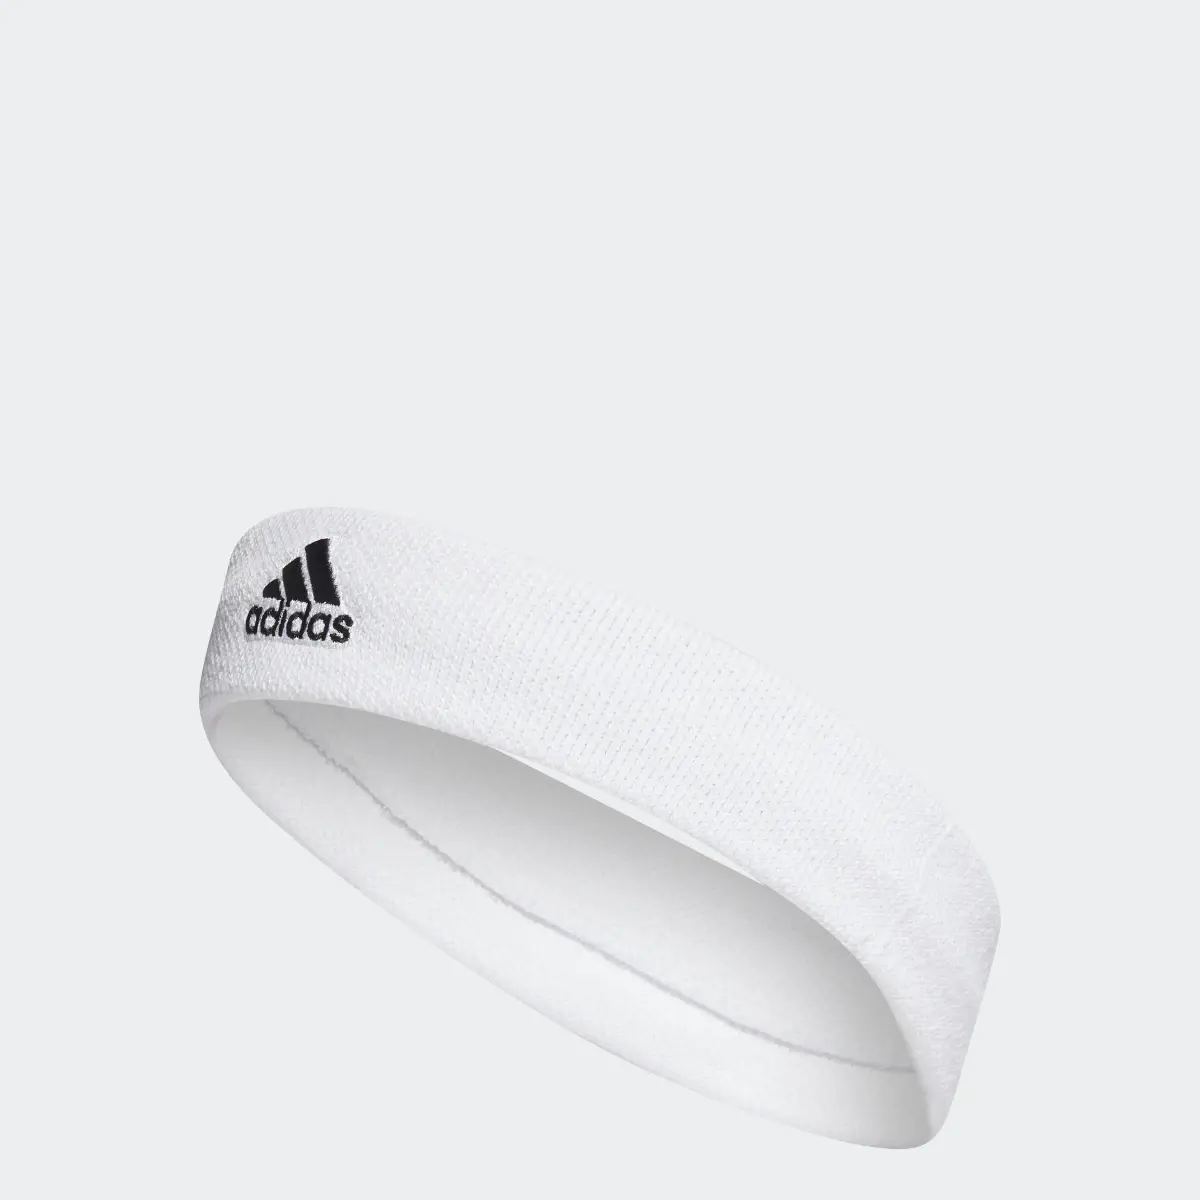 Adidas Tennis Headband. 1